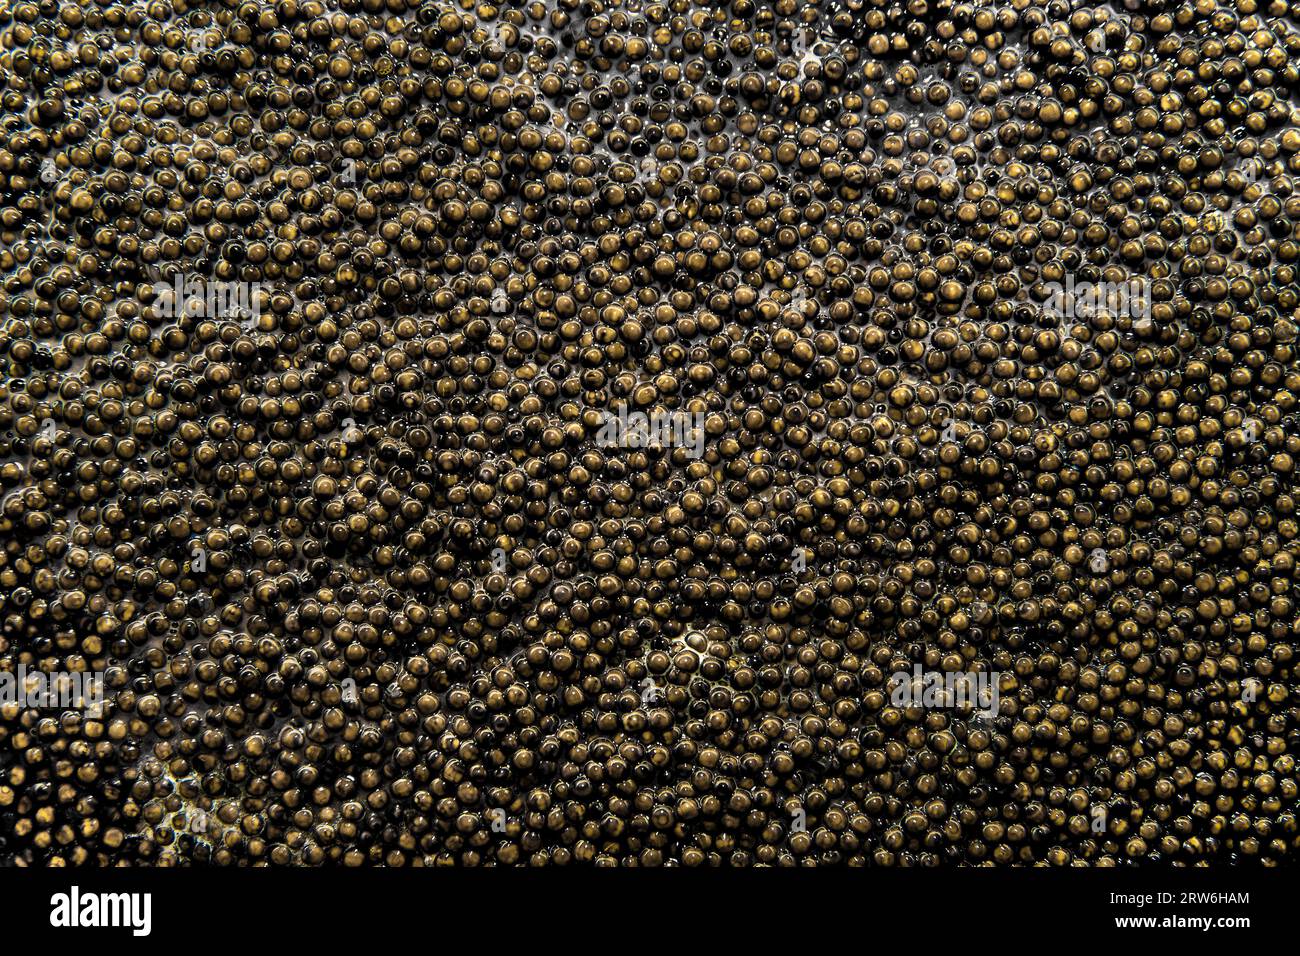 Background of Russian caviar. Stock Photo